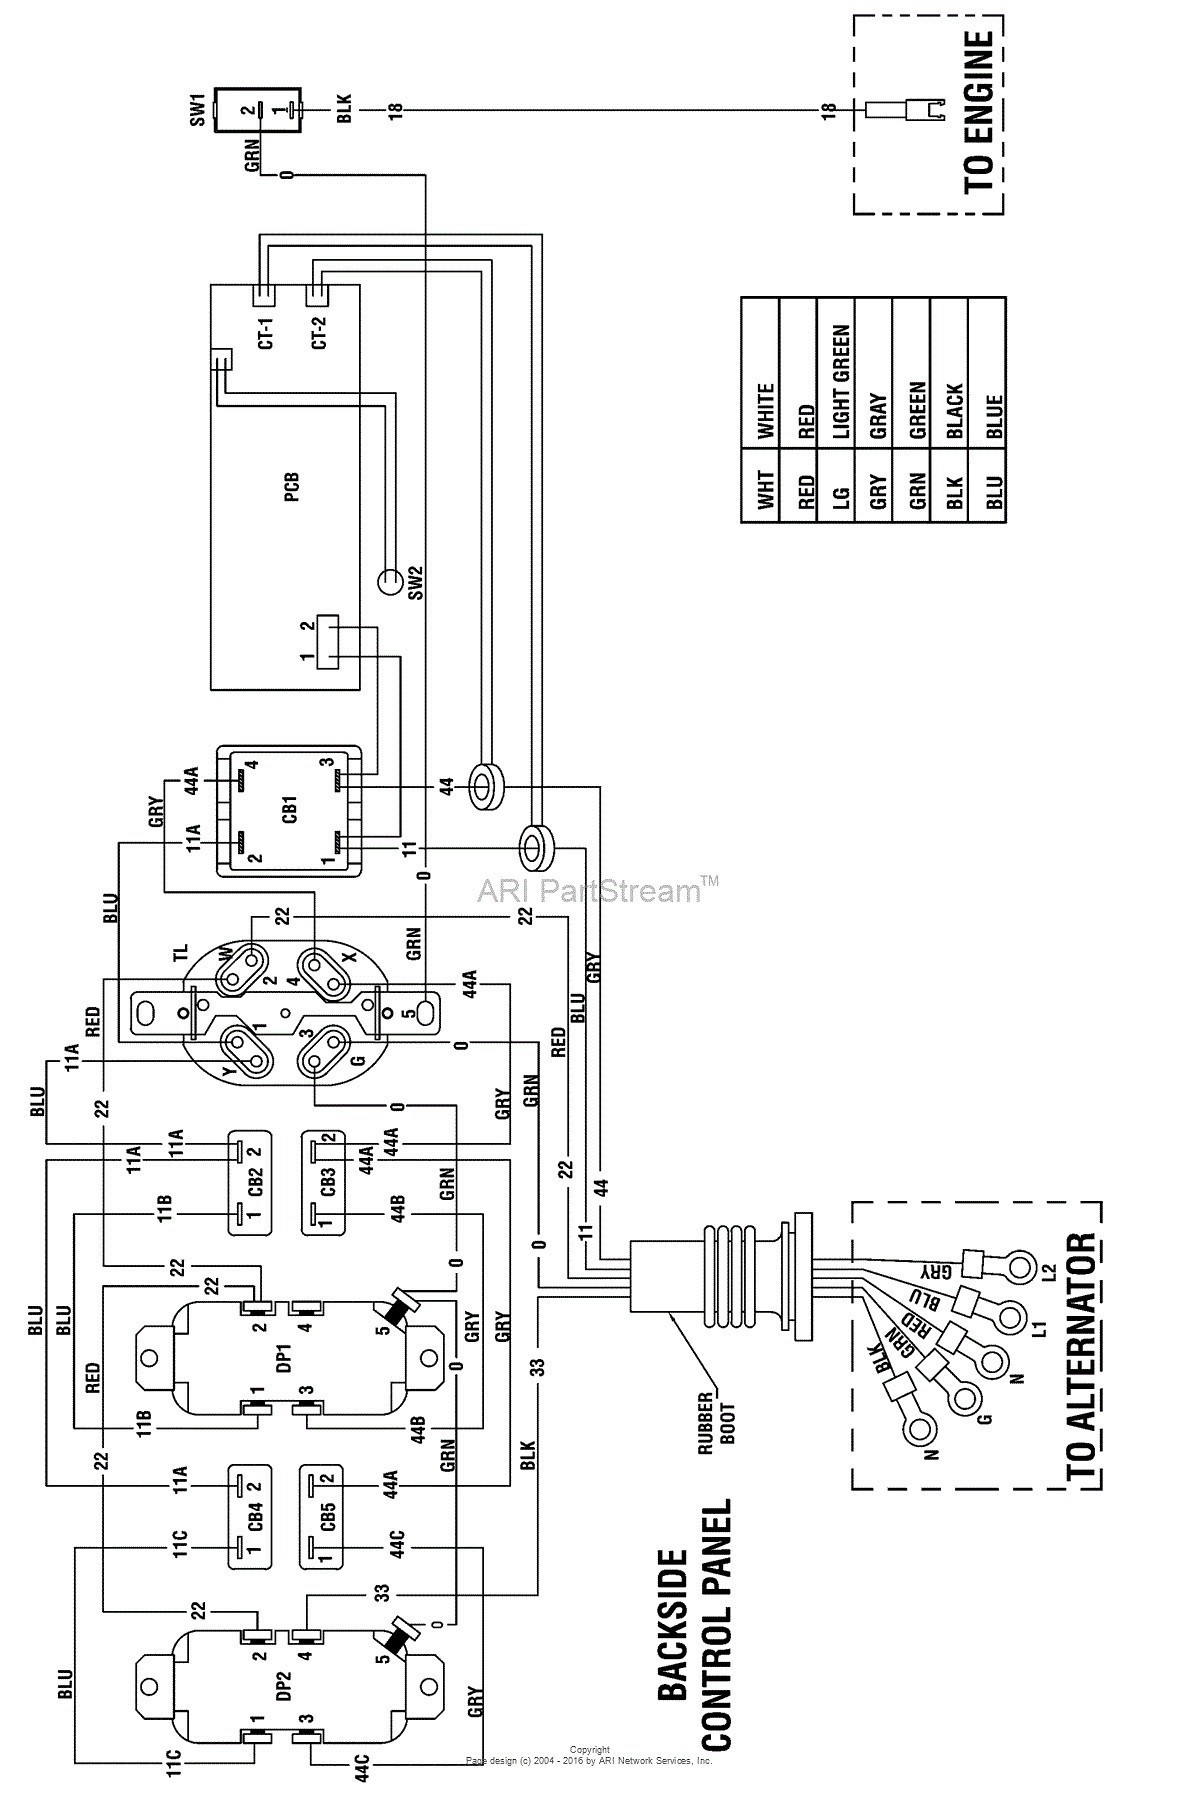 briggs and stratton alternator wiring diagram new wiring diagram briggs stratton engine archives gidn co best of briggs and stratton alternator wiring diagram